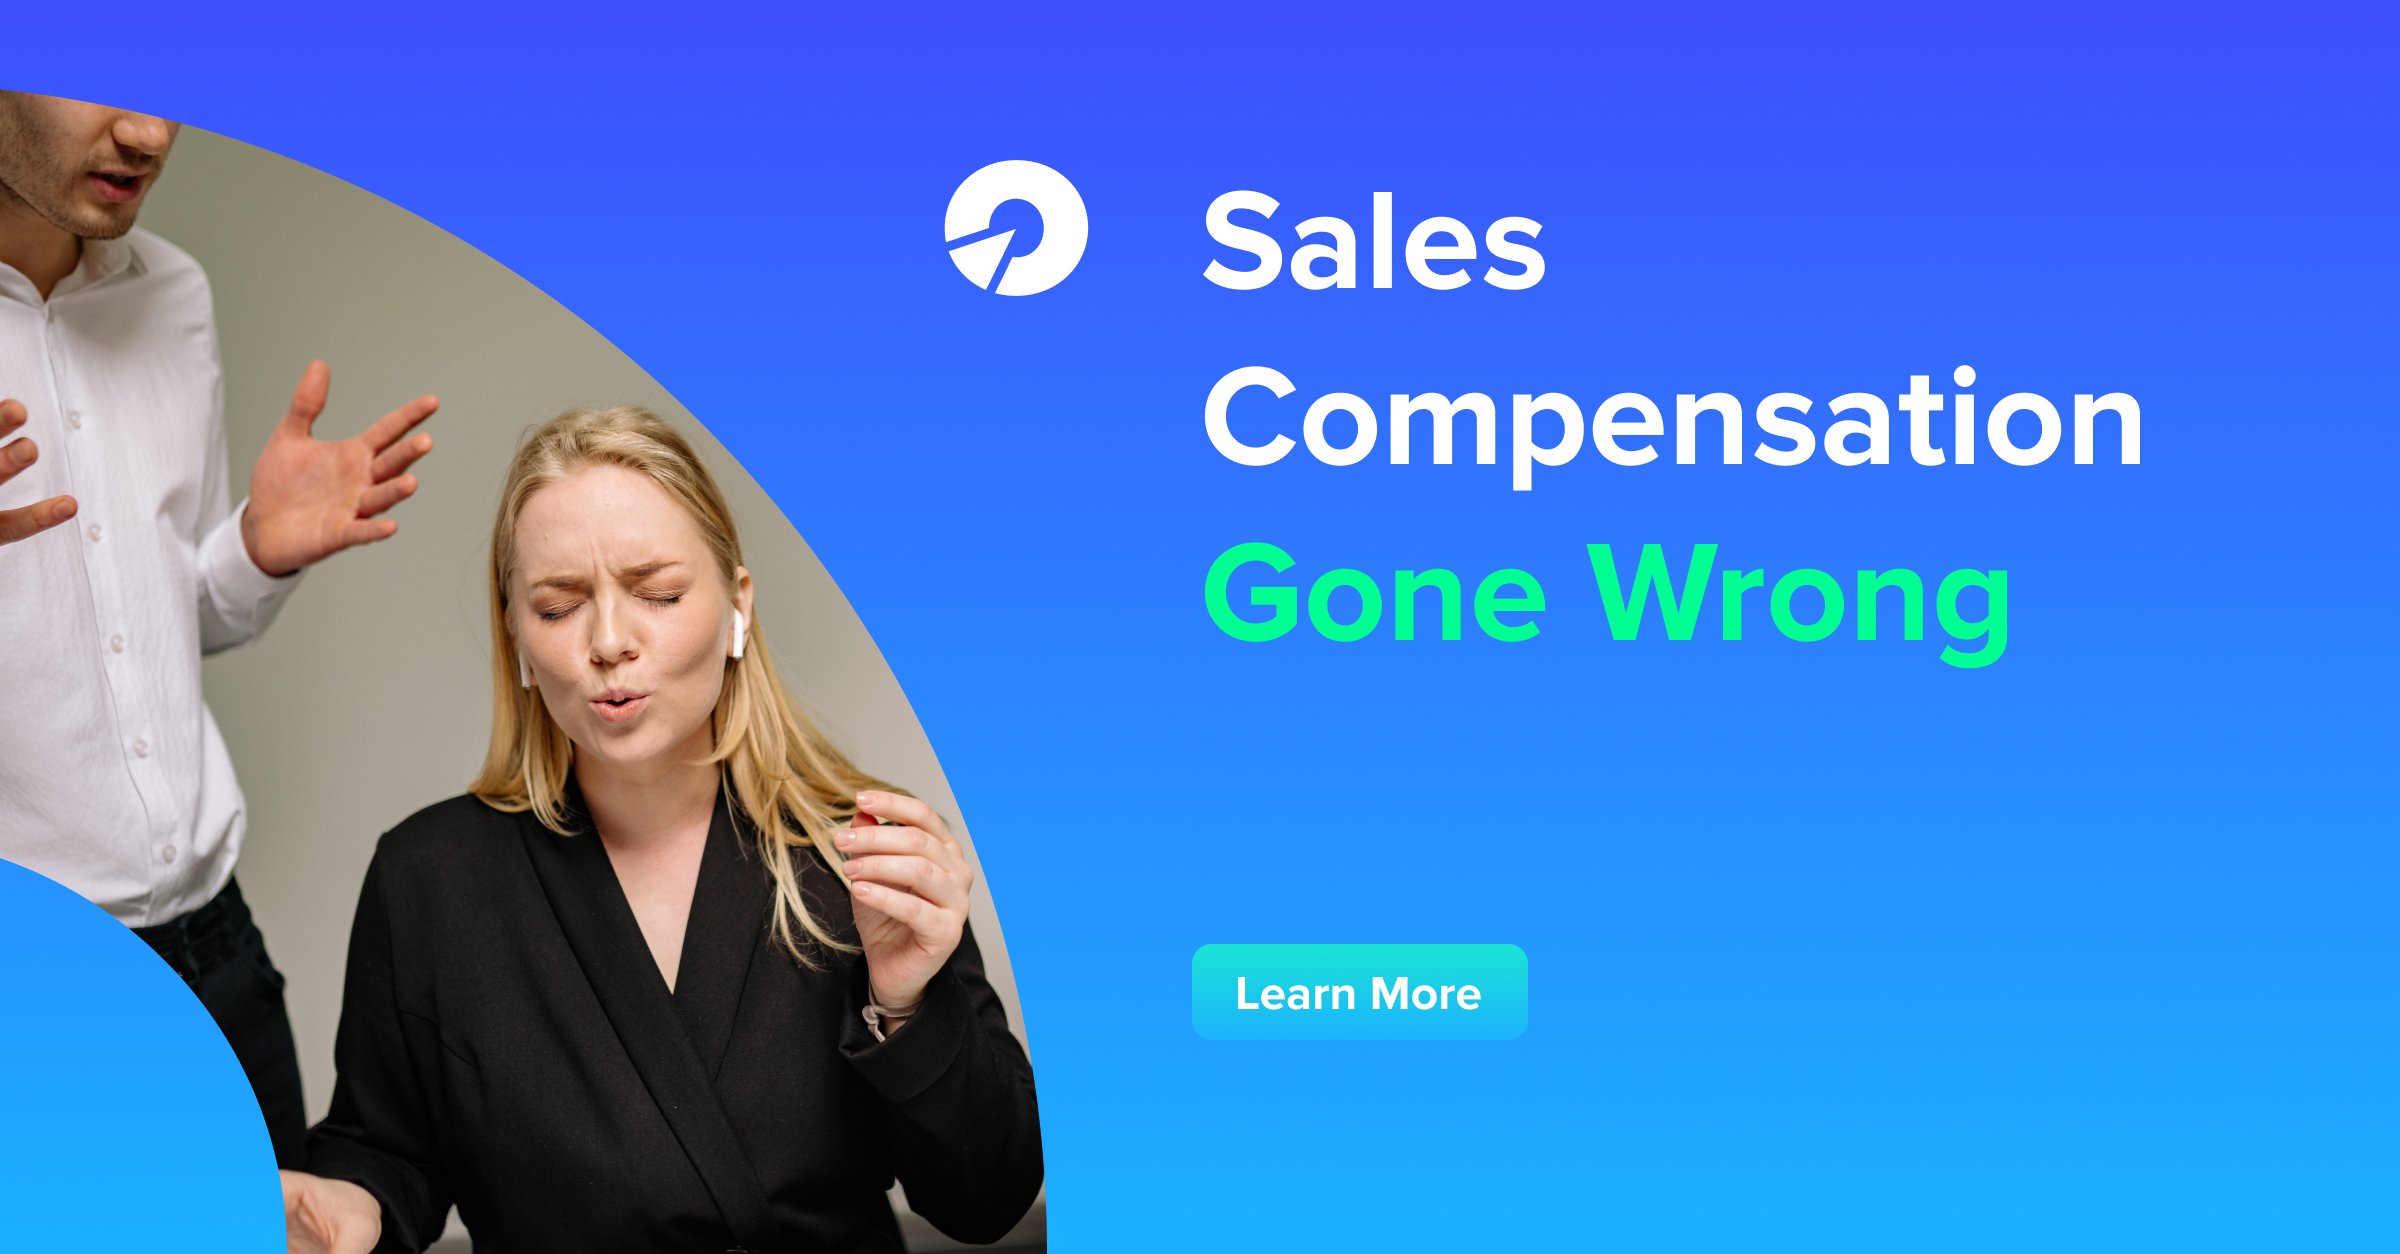 Sales Compensation Gone Wrong